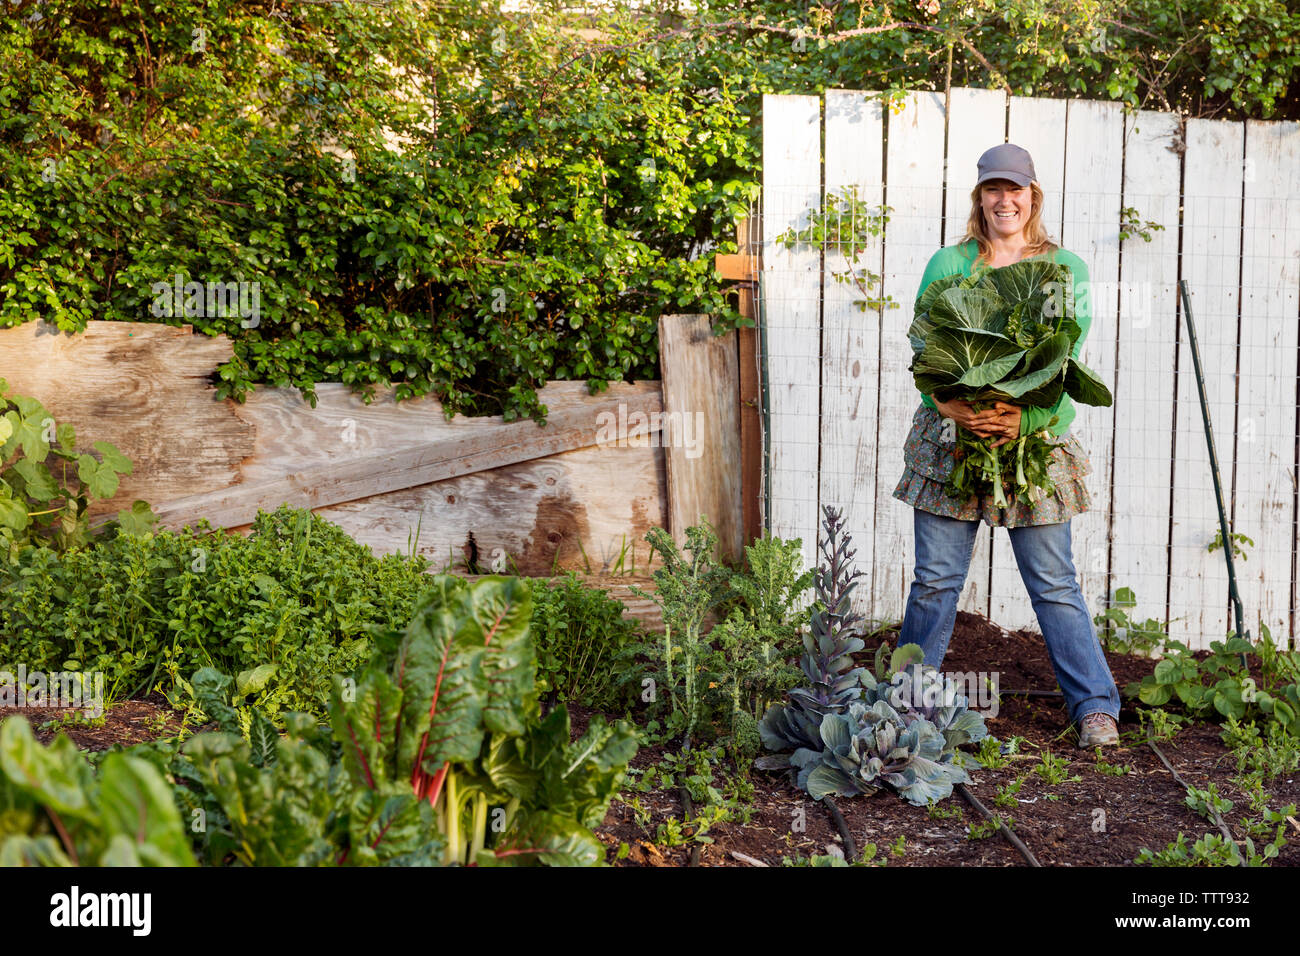 Portrait of woman farmer smiling holding freshly picked vegetables on farm Stock Photo